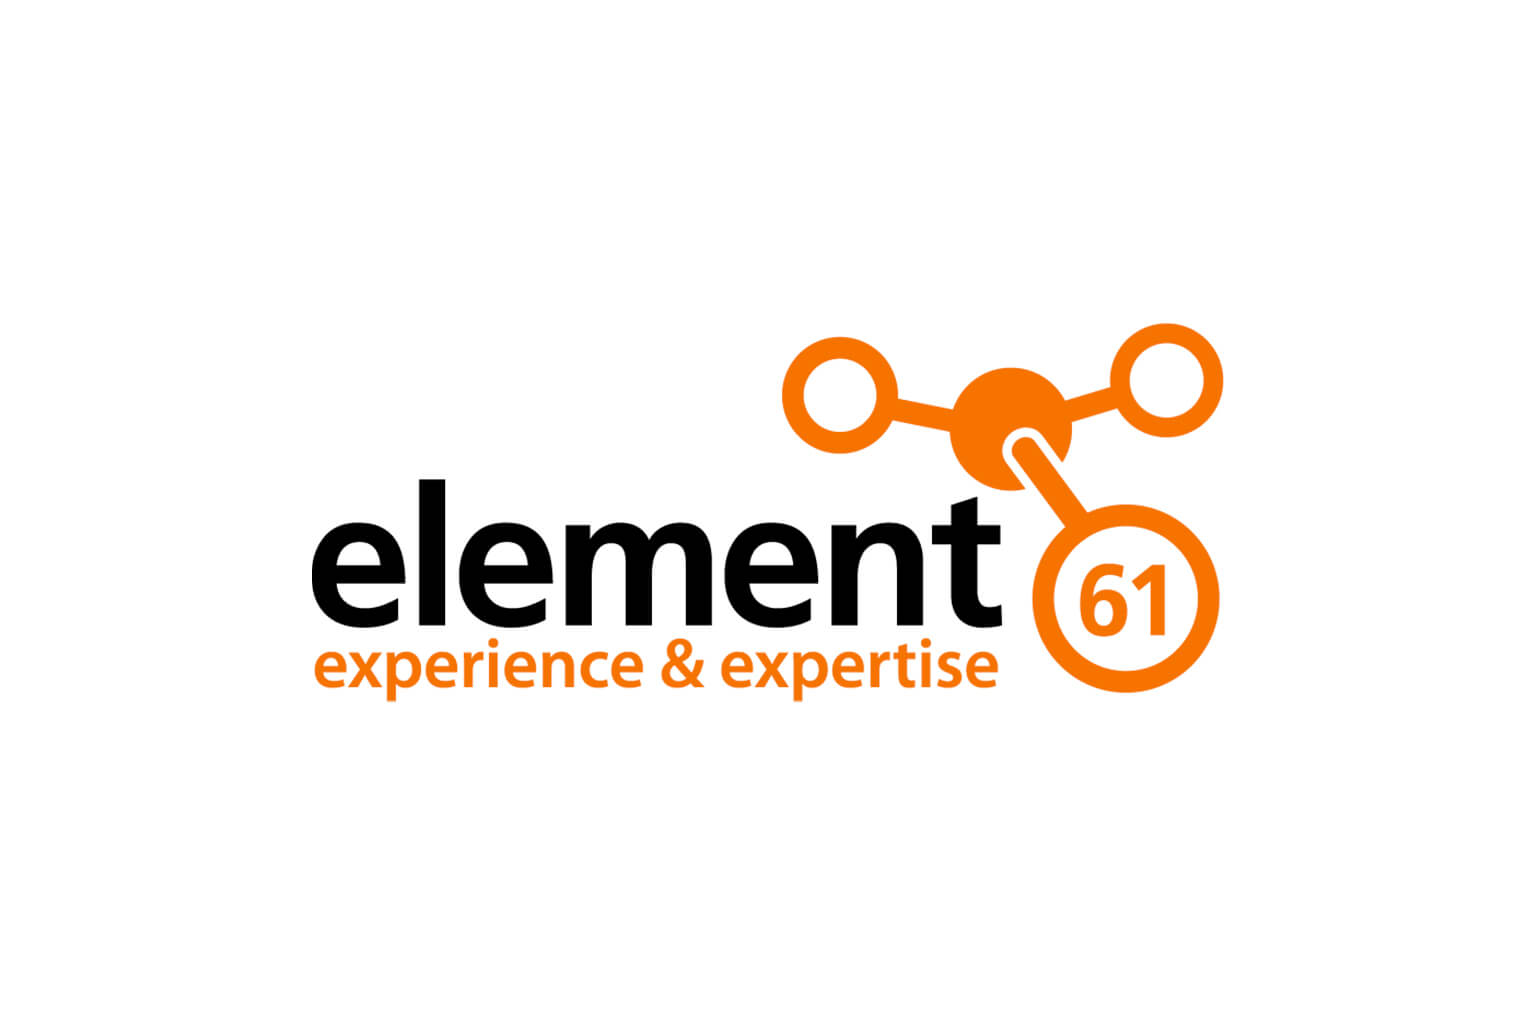 Element61